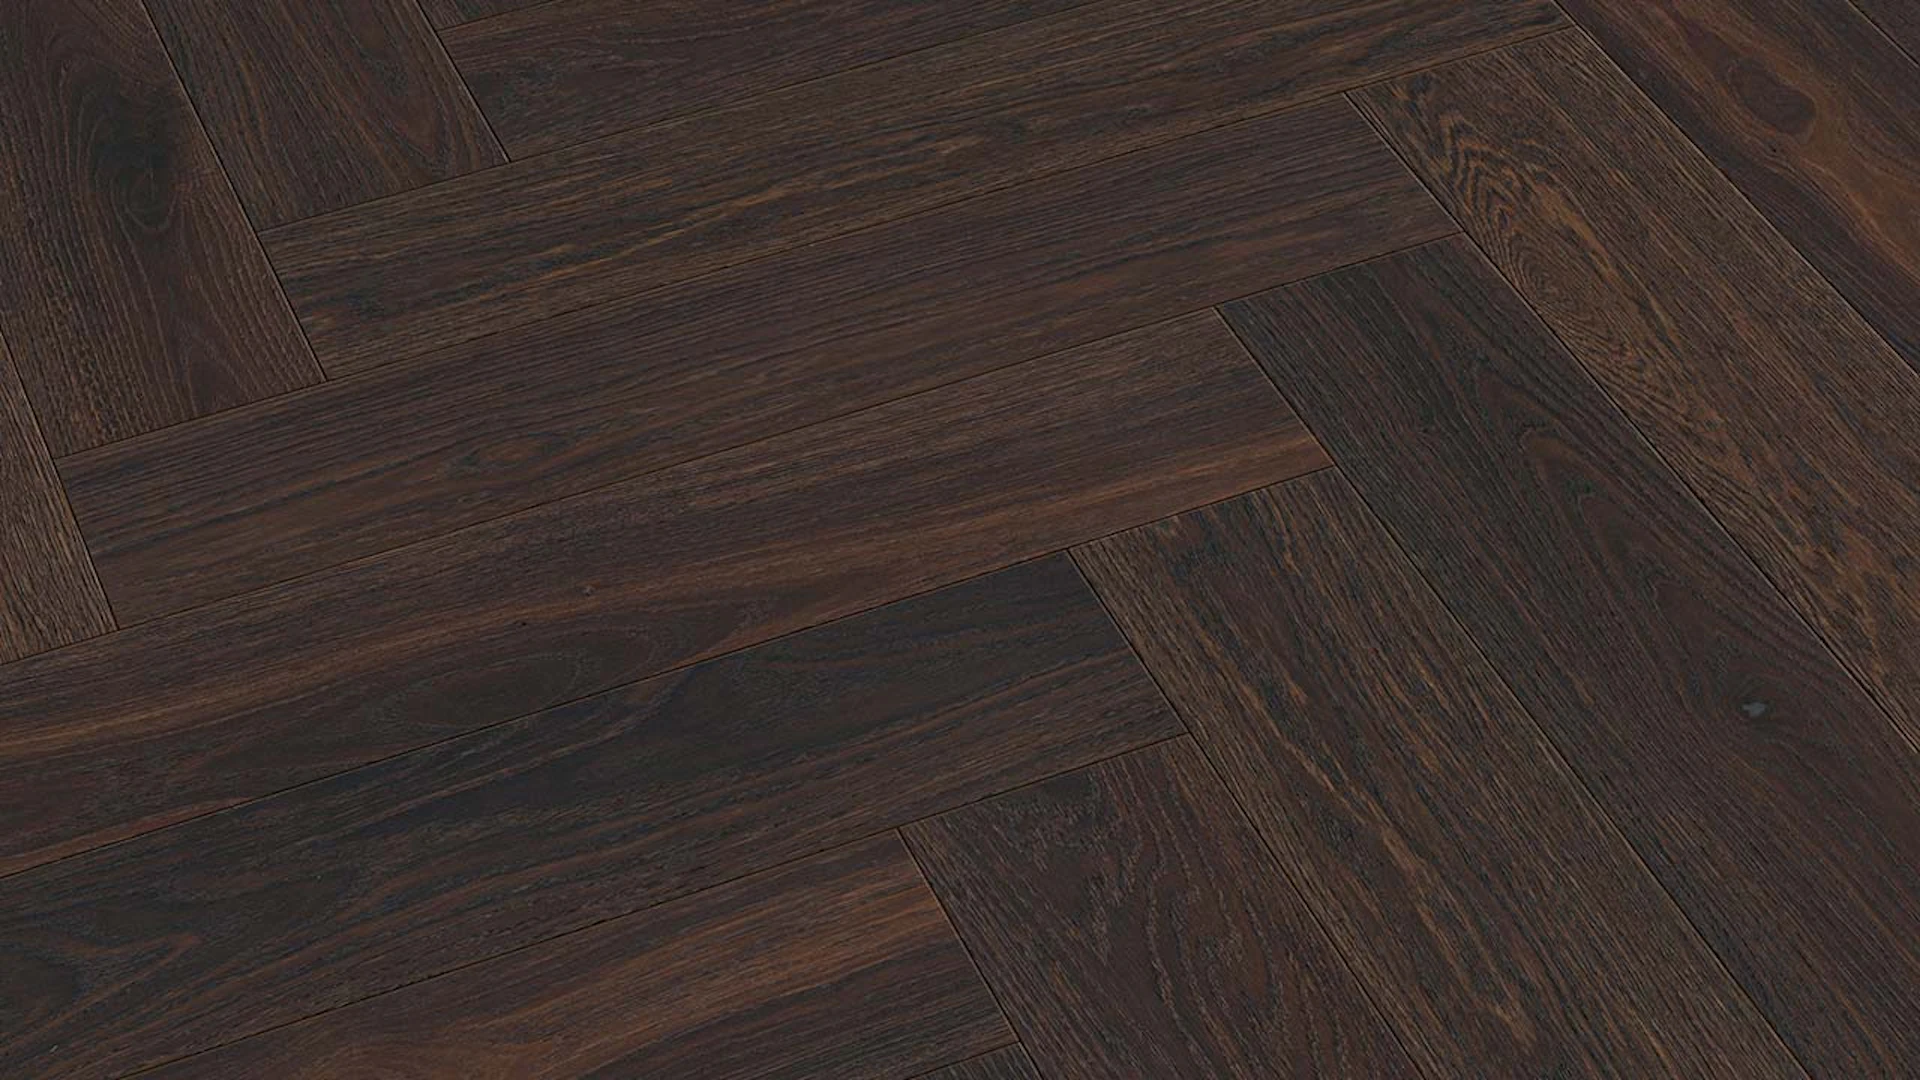 MEISTER Parquet Flooring - Longlife PS 500 Harmonic heart oak (500007-0710142-09018)